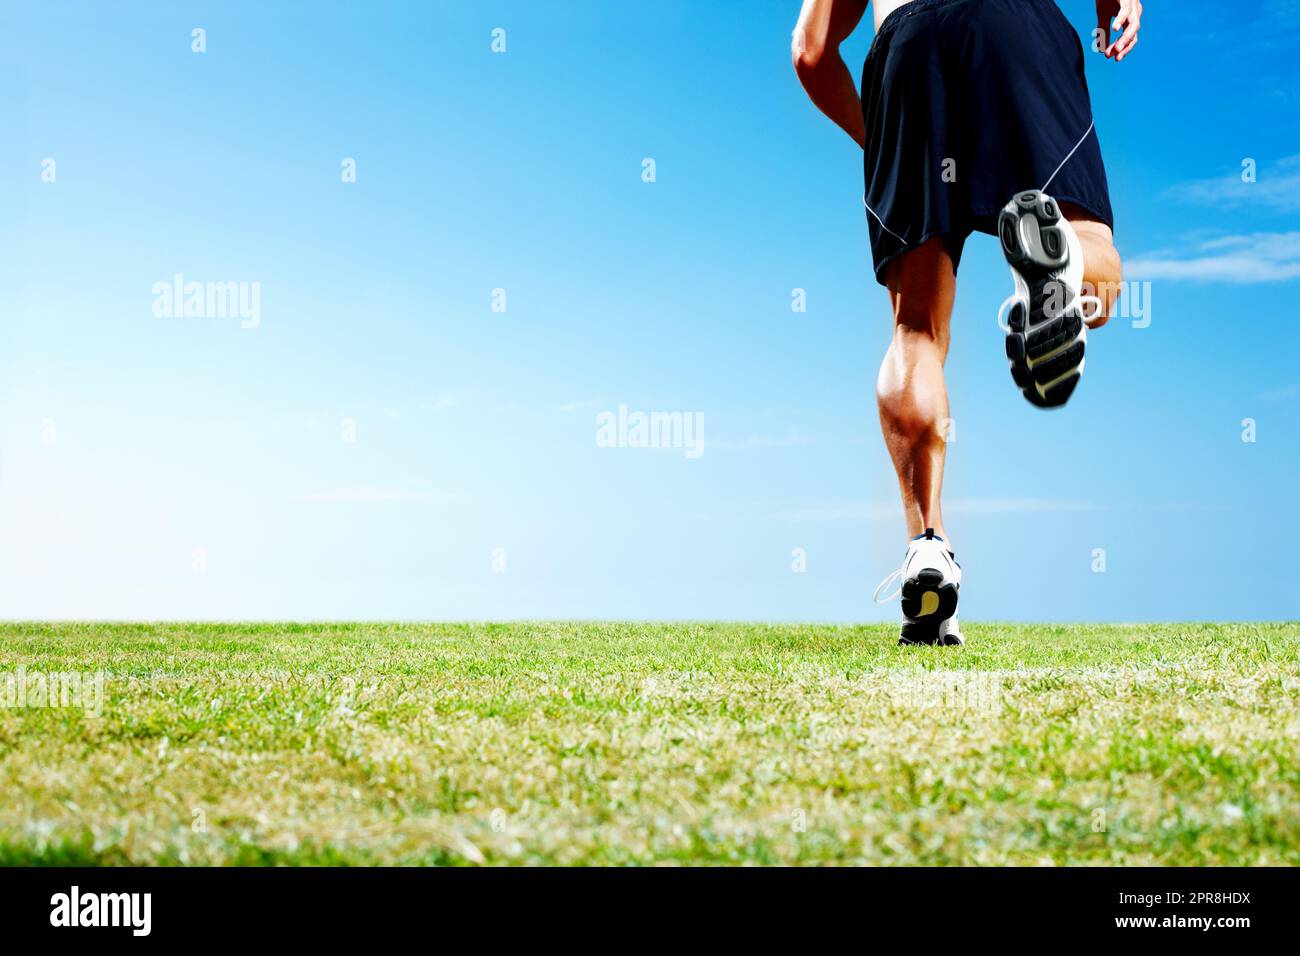 Junger Mann beim Joggen gegen den Himmel - Outdoor. Zugeschnittenes Bild eines jungen Mannes, der gegen den Himmel joggt - Copyspace. Stockfoto